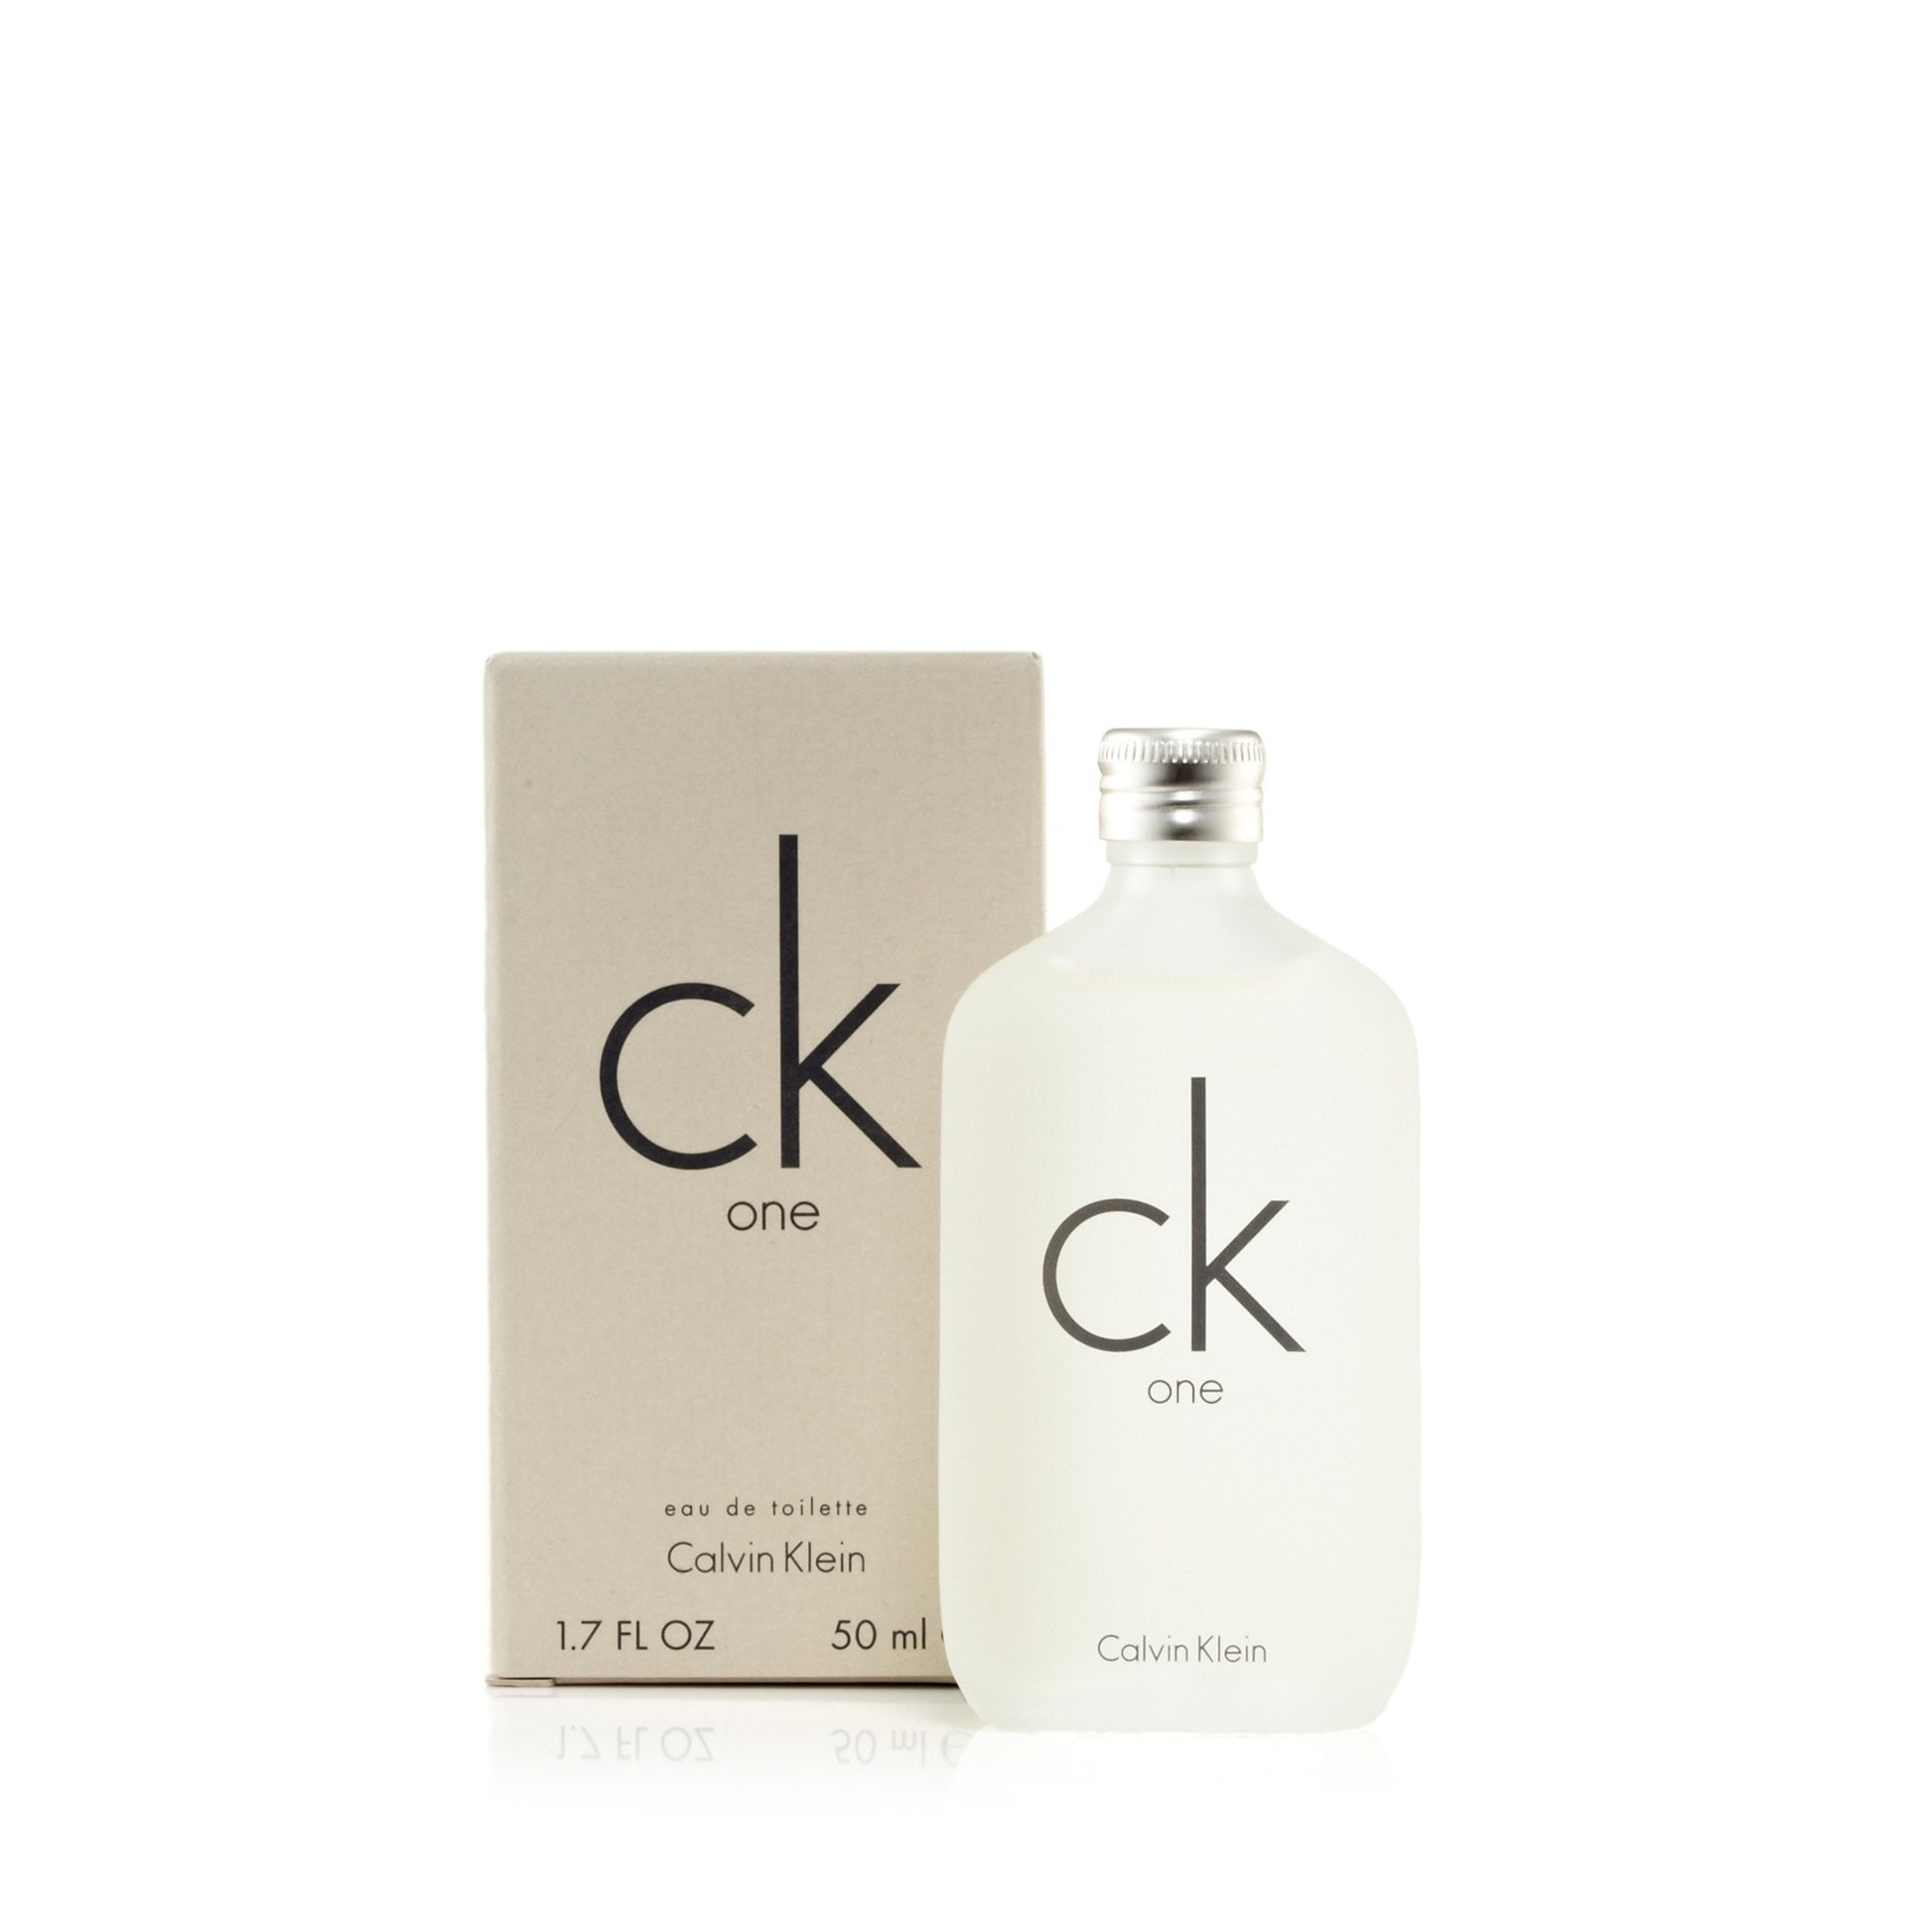 CK One Eau de Toilette Spray for Women and Men by Calvin Klein 1.7 oz. Click to open in modal